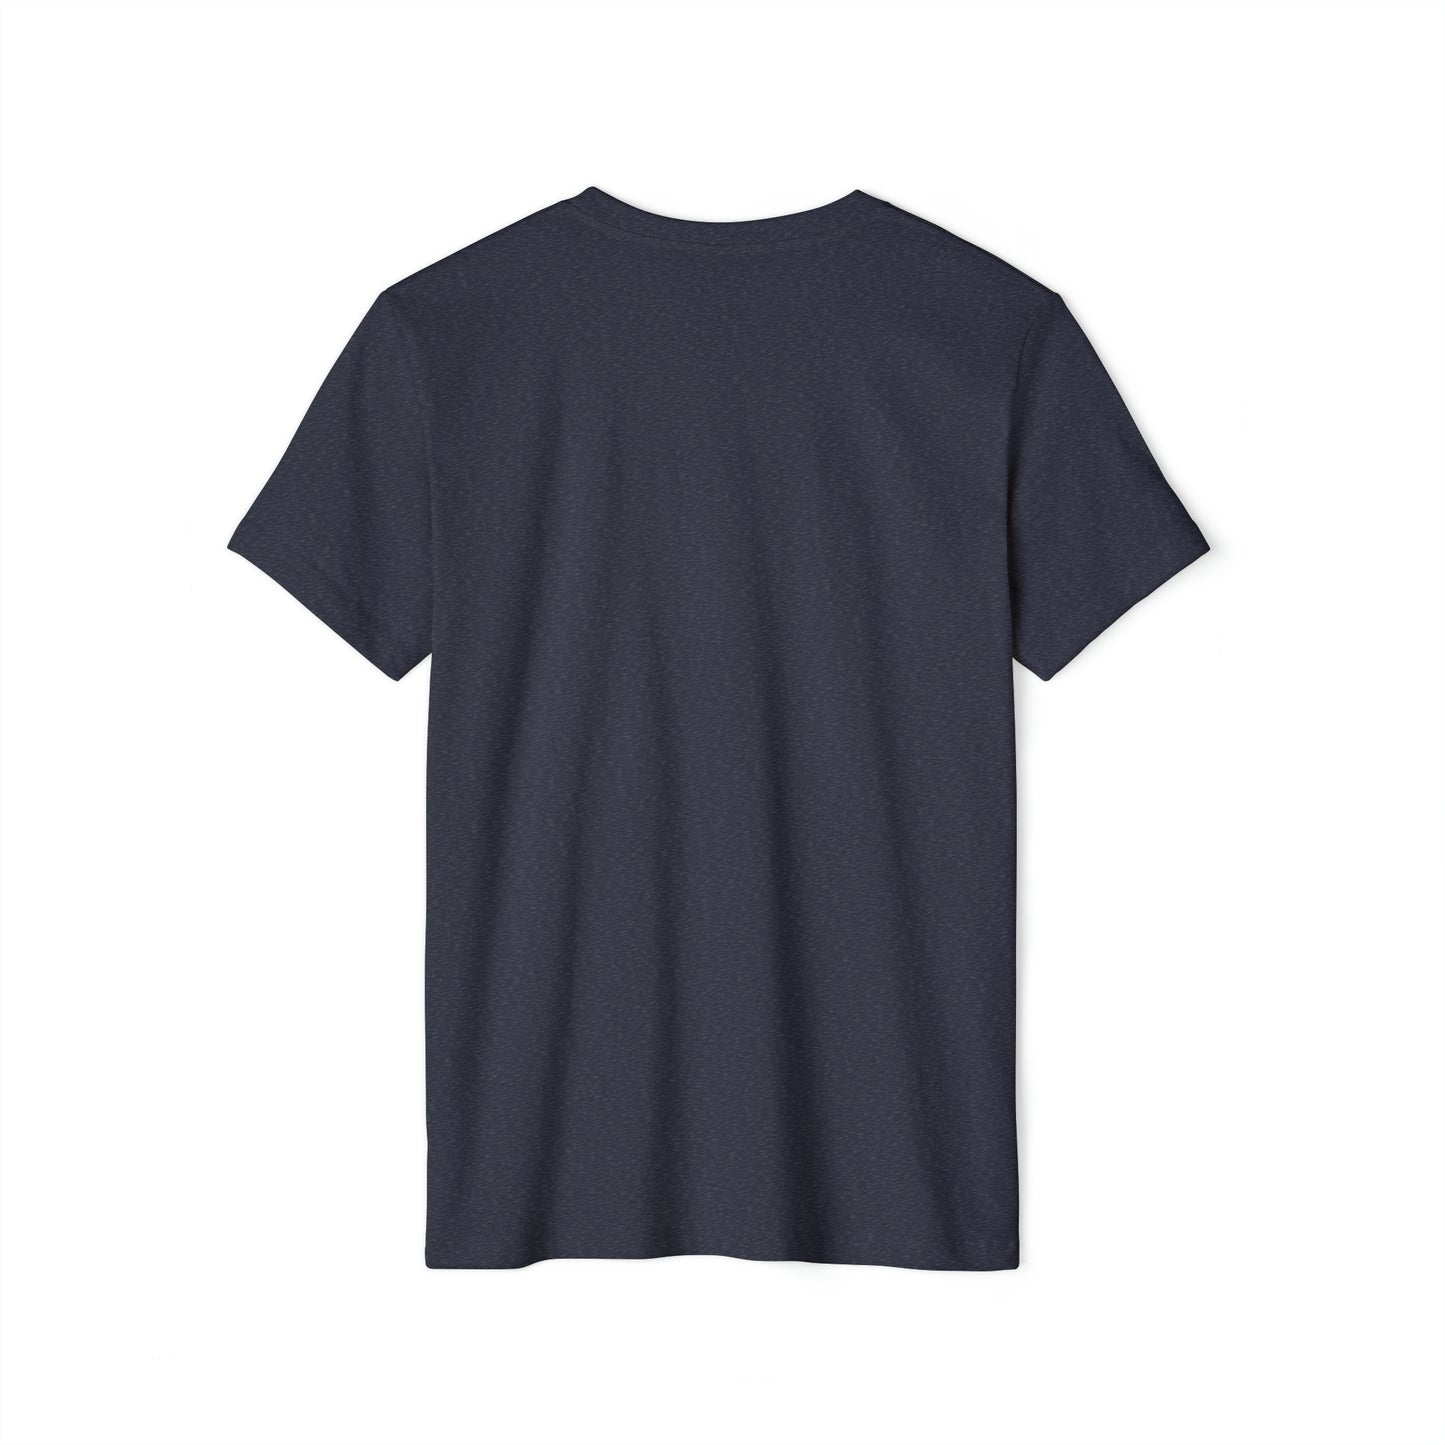 'Detroit' T-Shirt (Azure Old English 'D') | Unisex Recycled Organic